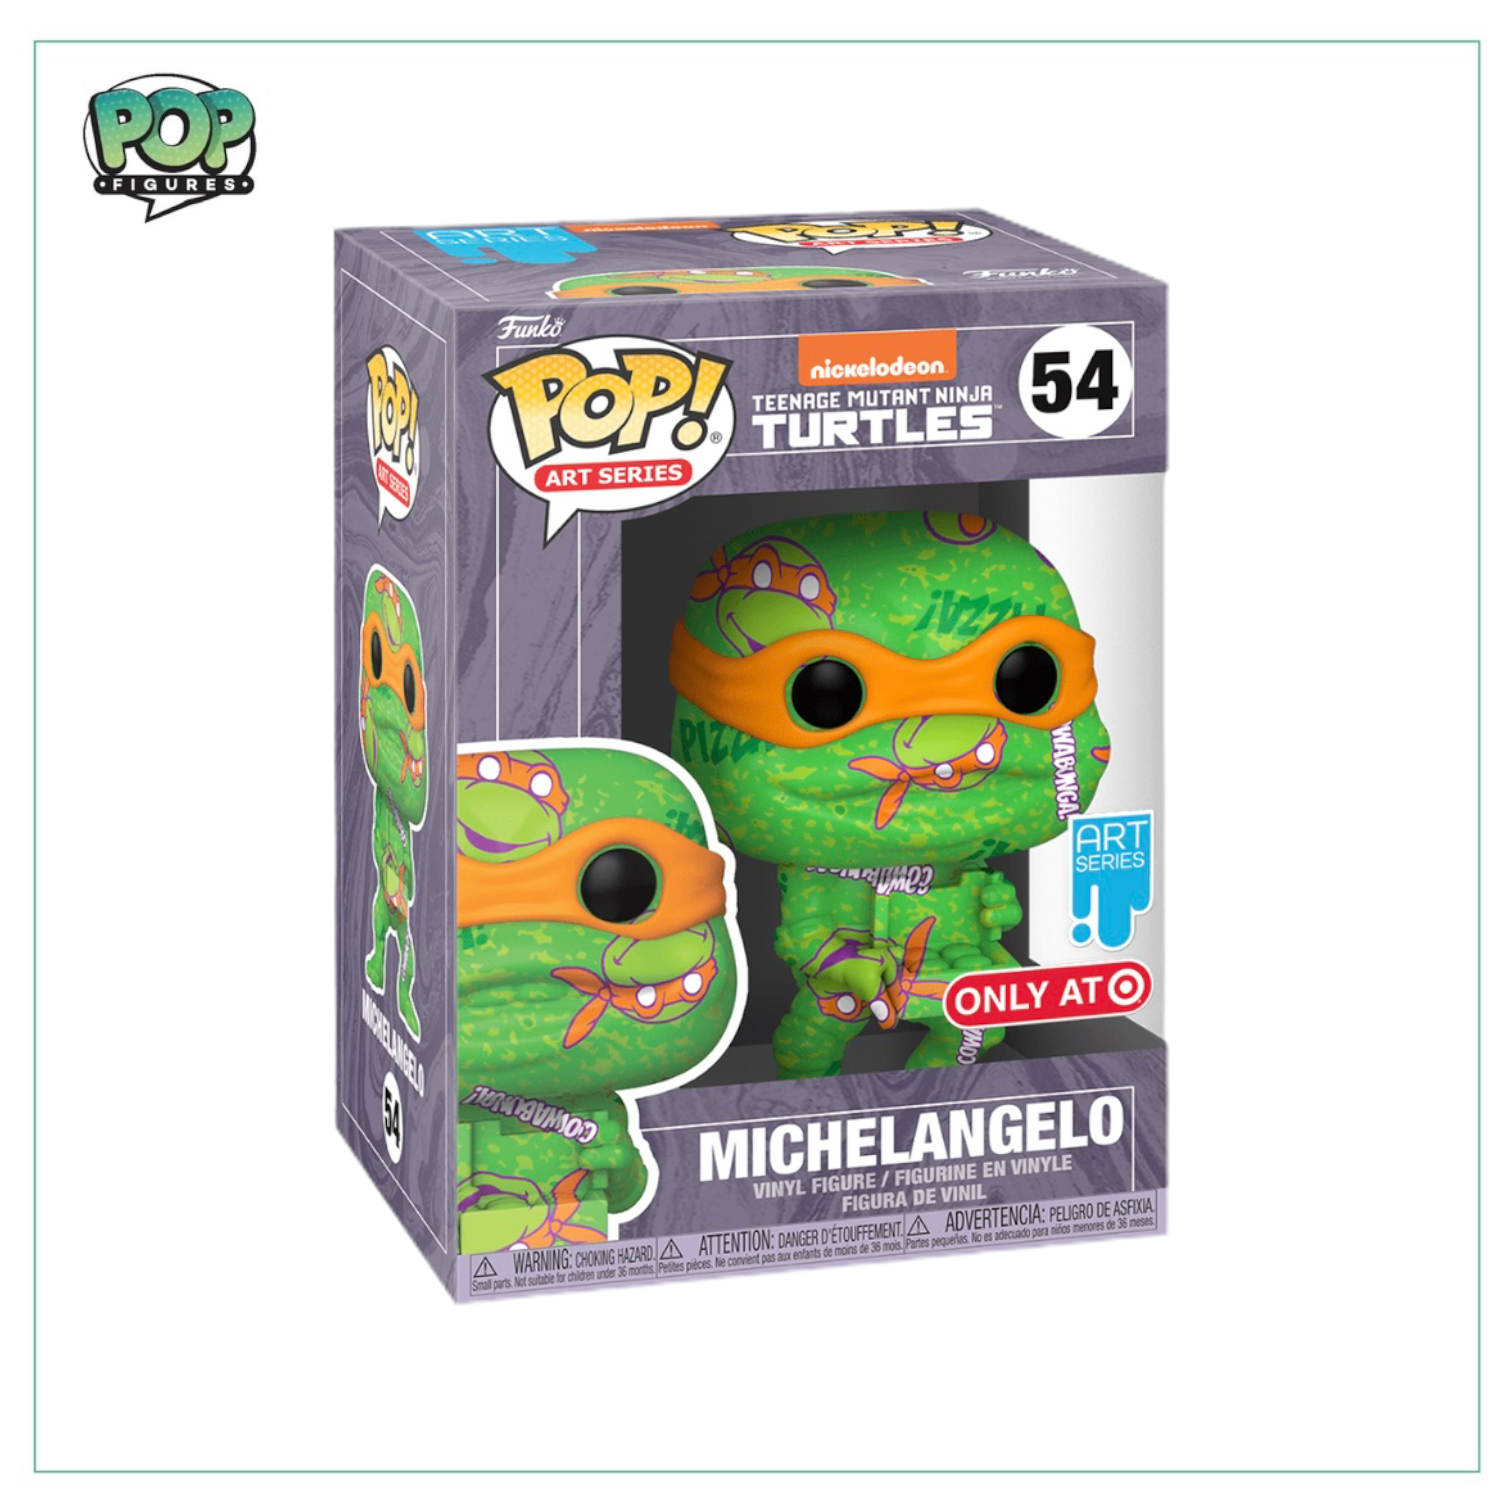 Michelangelo (Art Series) #54 Funko Pop! - Teenage Mutant Ninja Turtles -Target Exclusive